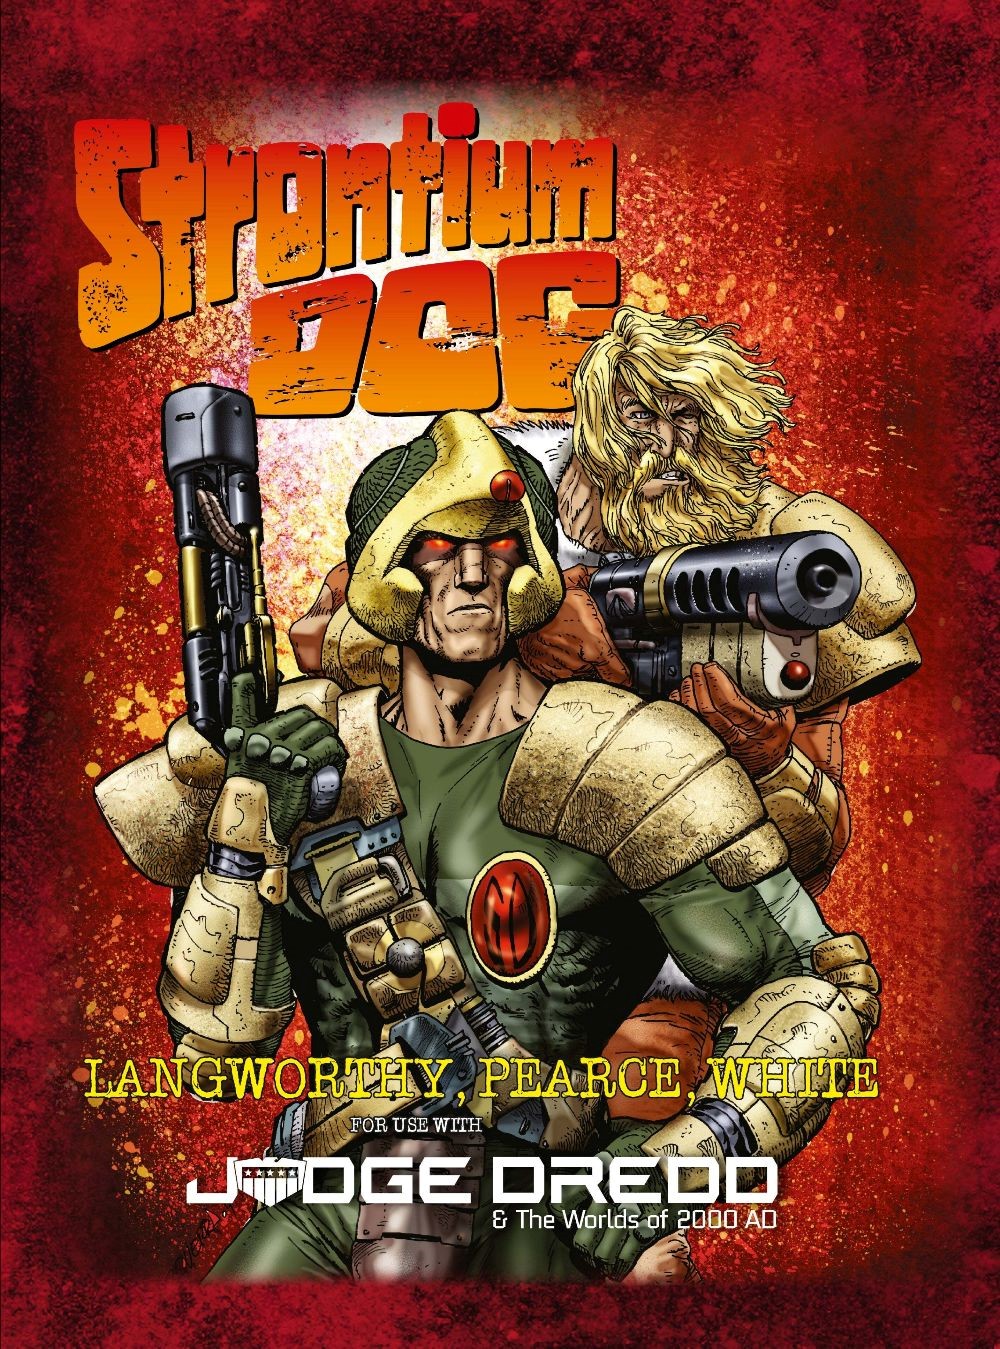 Judge Dredd & The Worlds of 2000 AD: Strontium Dog 